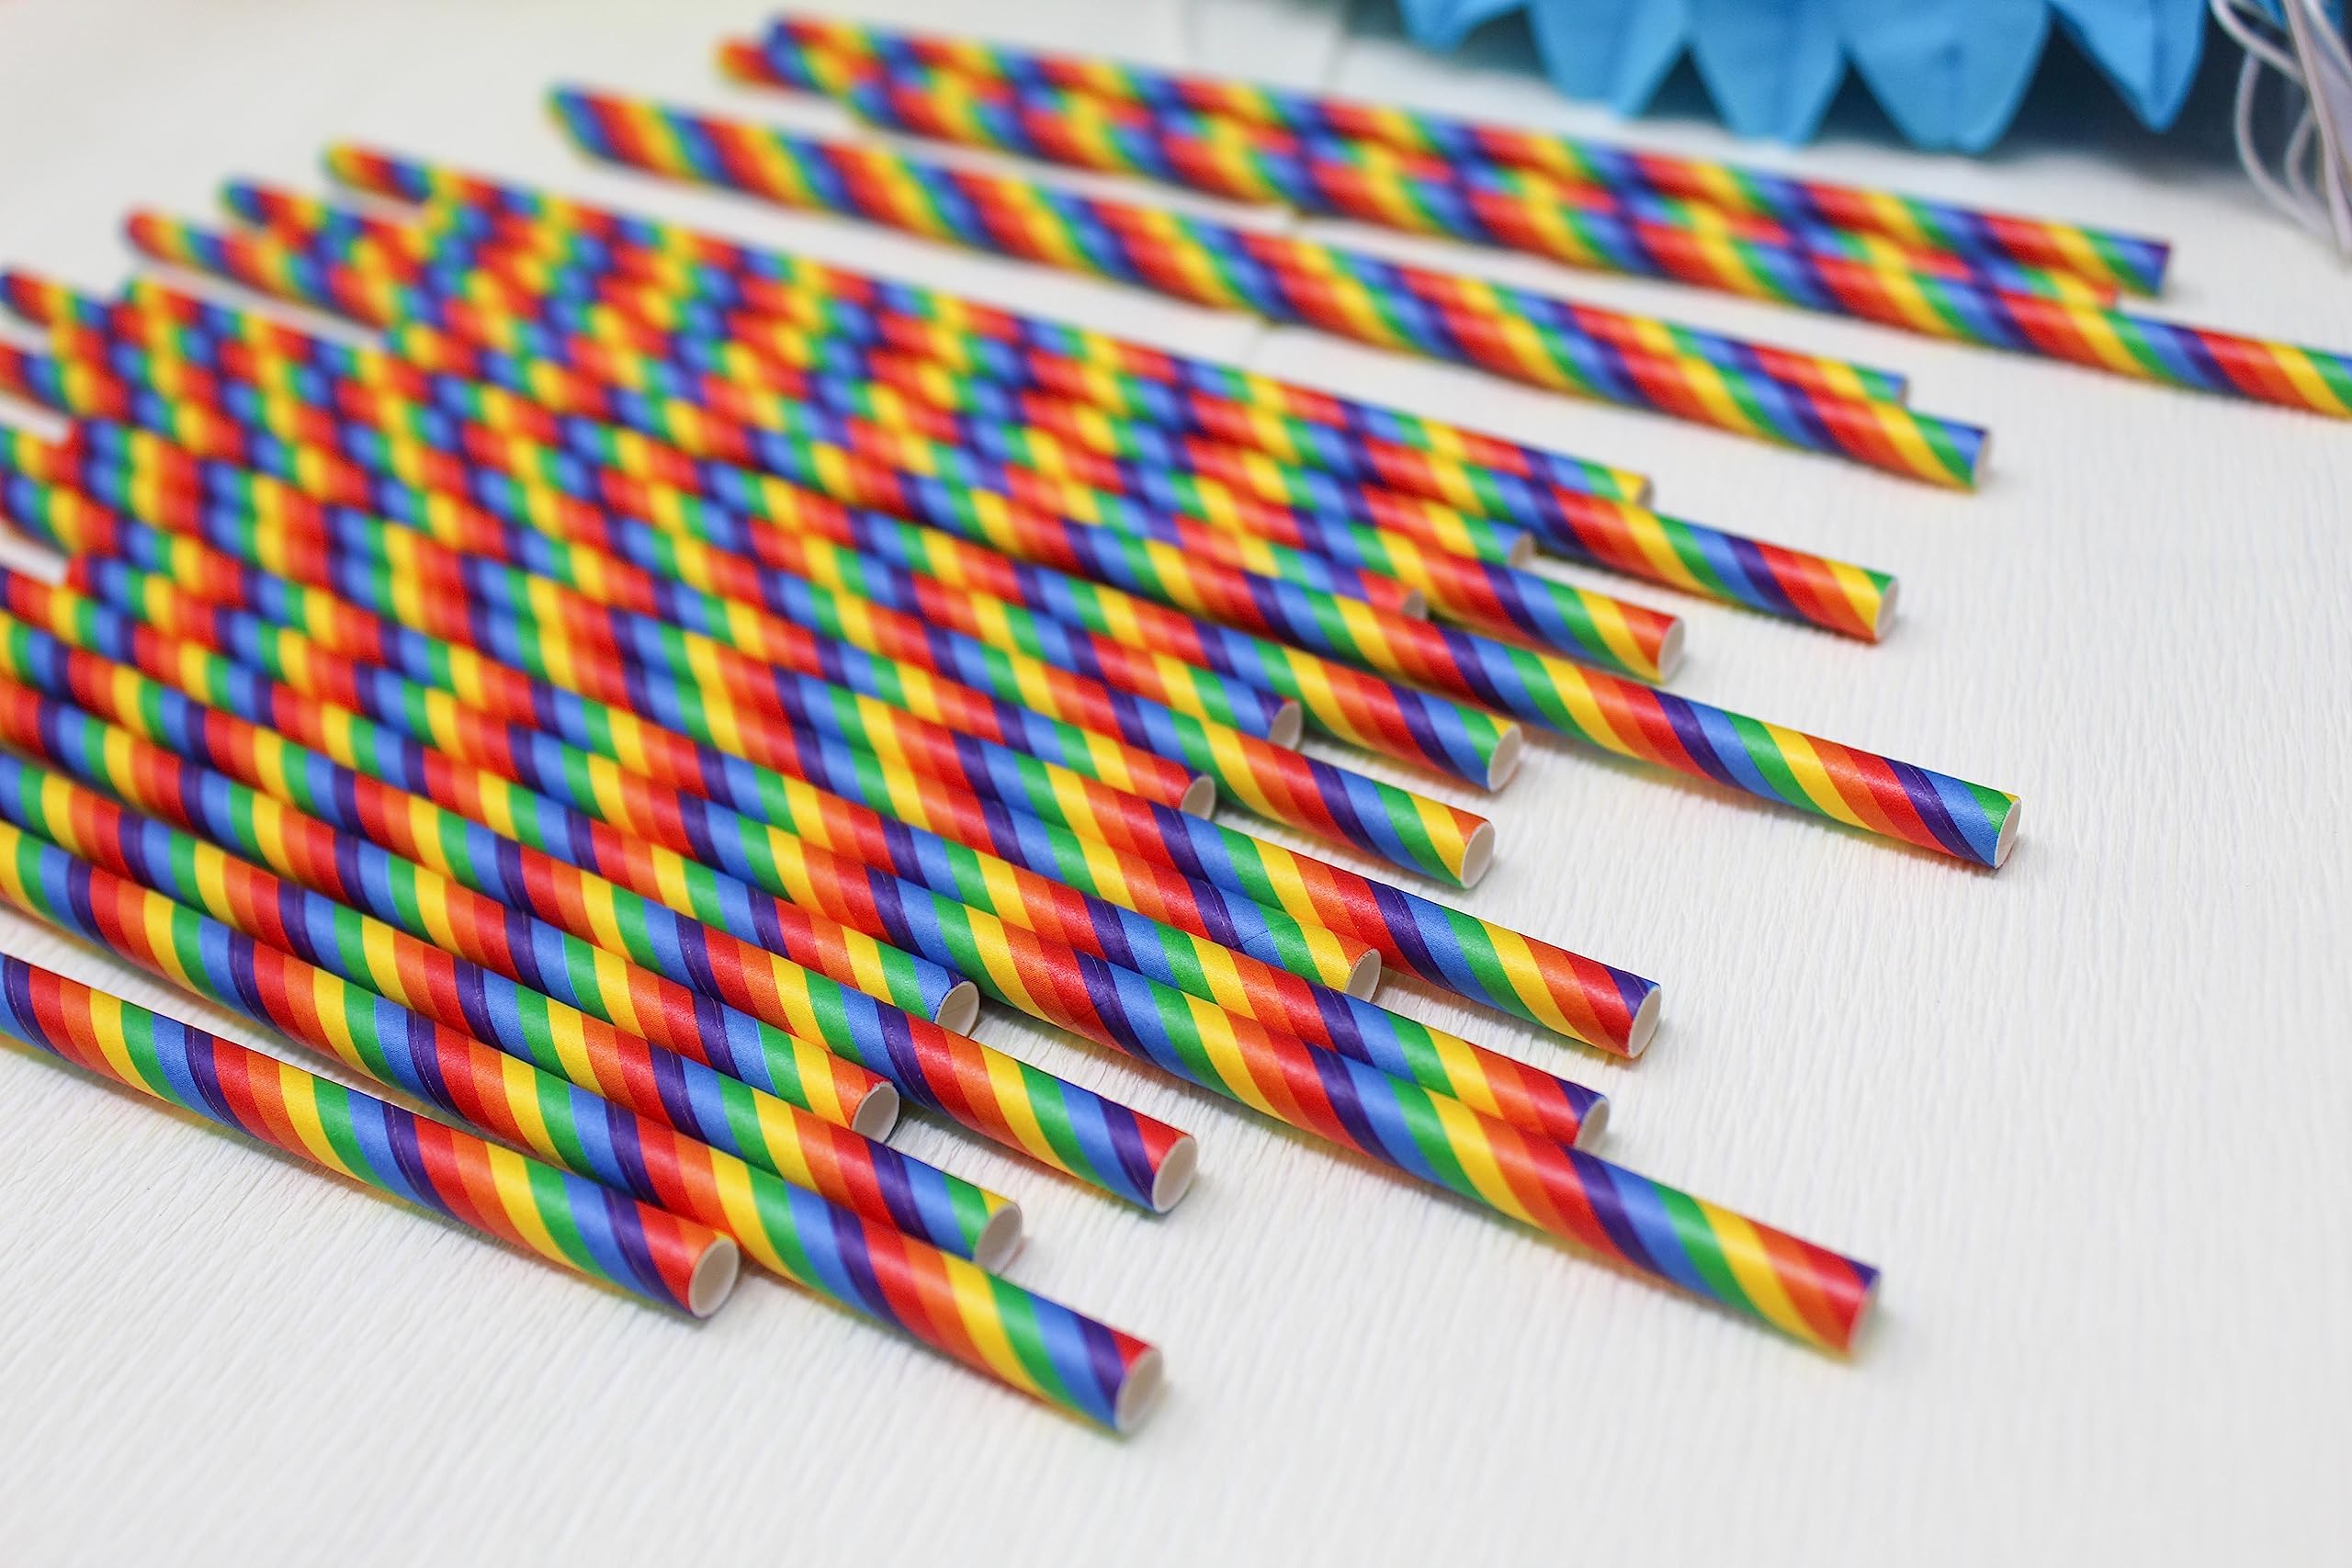 Just Artifacts Premium Disposable Drinking Striped Paper Straws (100pcs, Rainbow Pride)